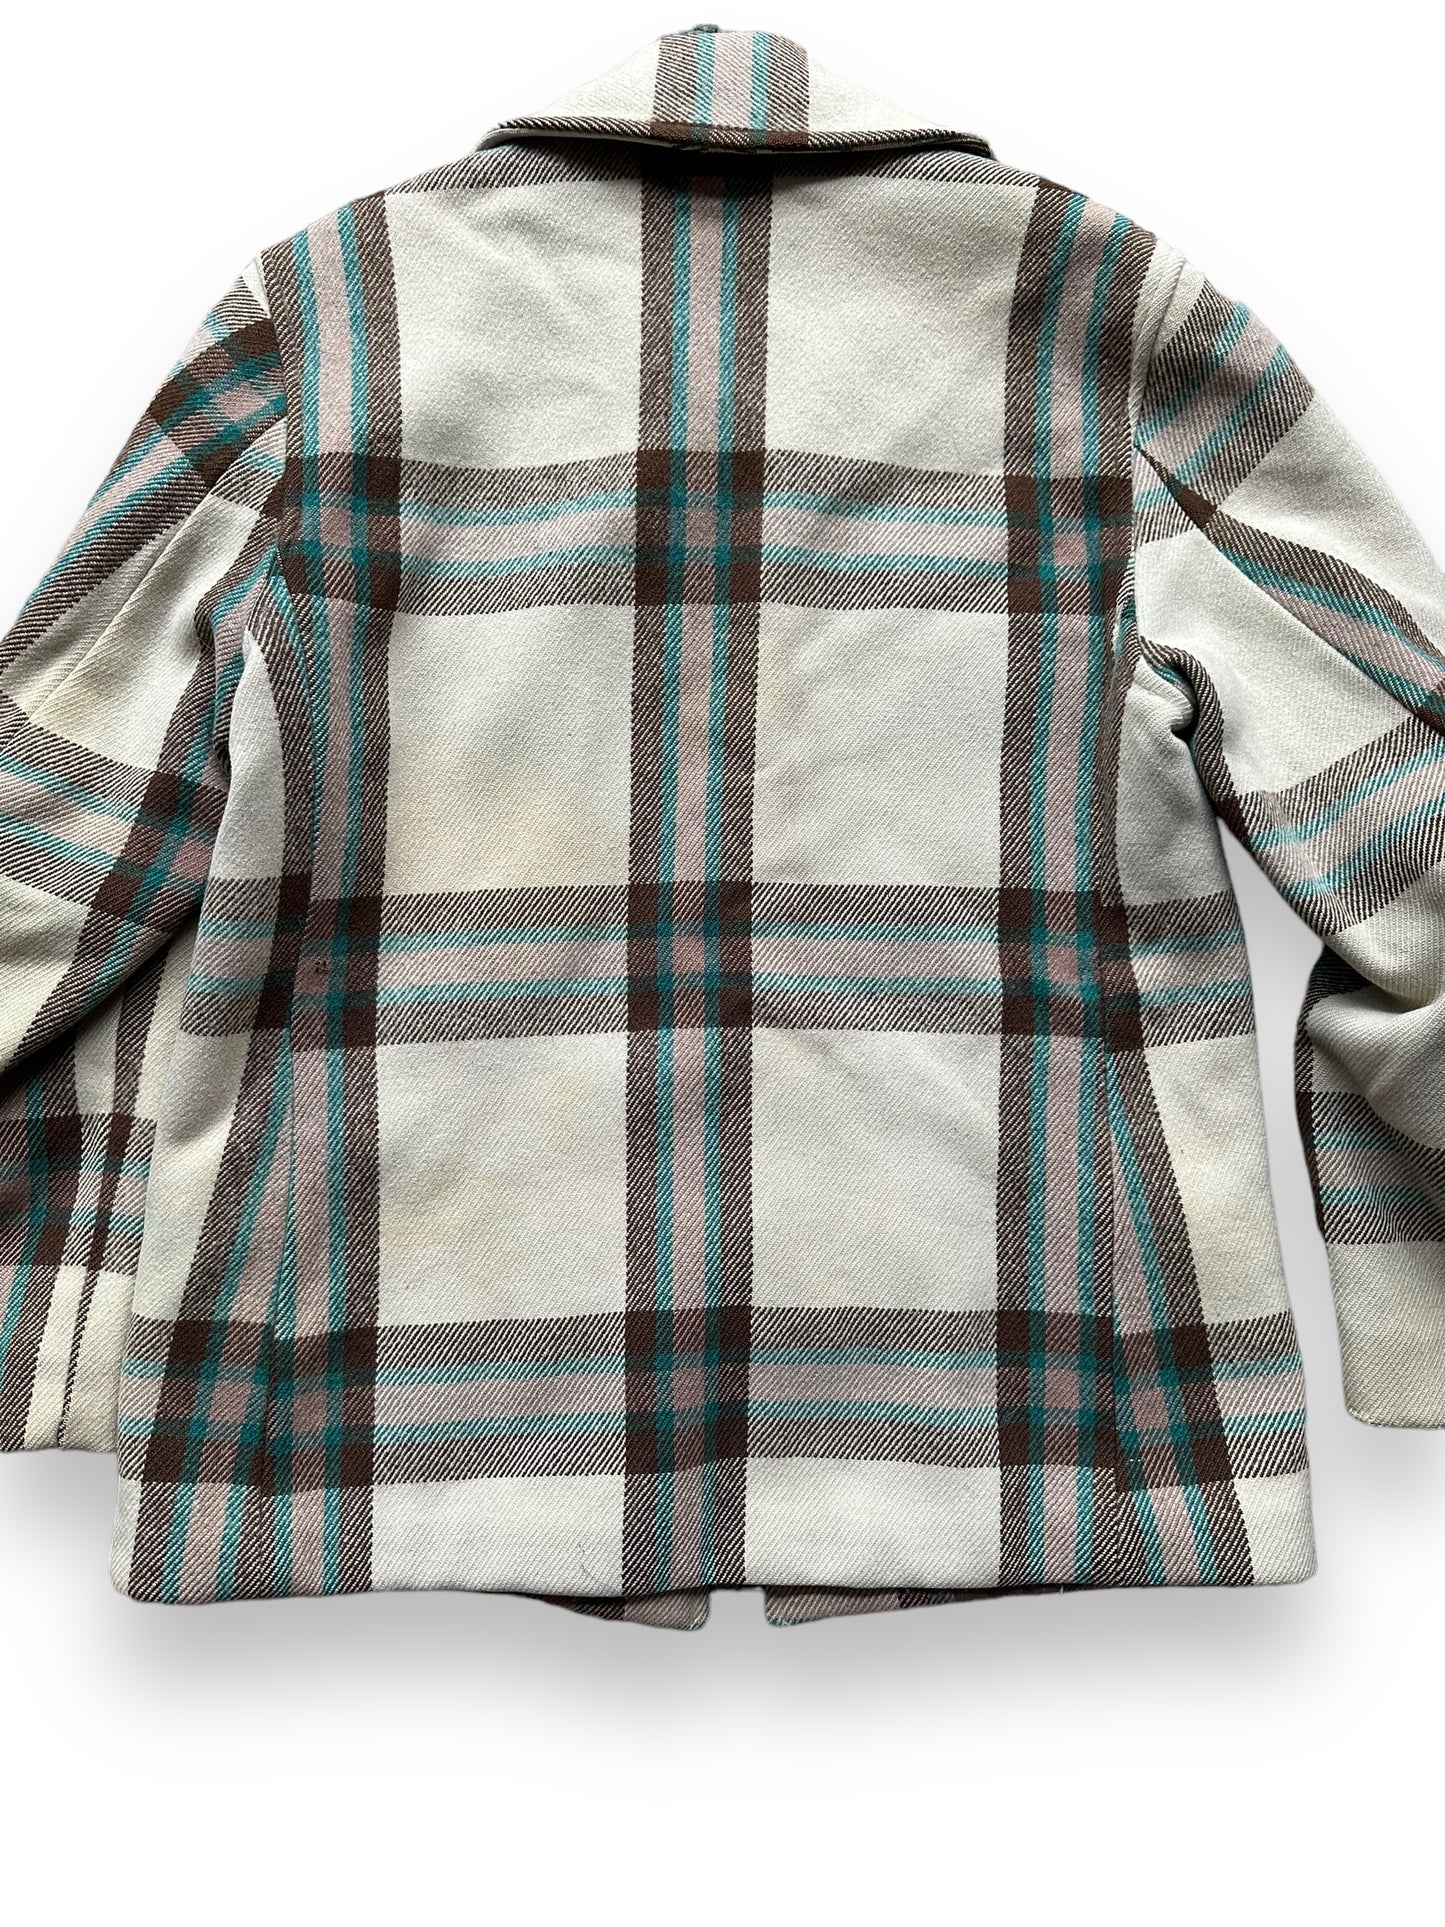 Rear Detail on Vintage Merrill Woolen Mills Jacket SZ L |  Barn Owl Vintage Goods | Vintage Wool Coat Seattle